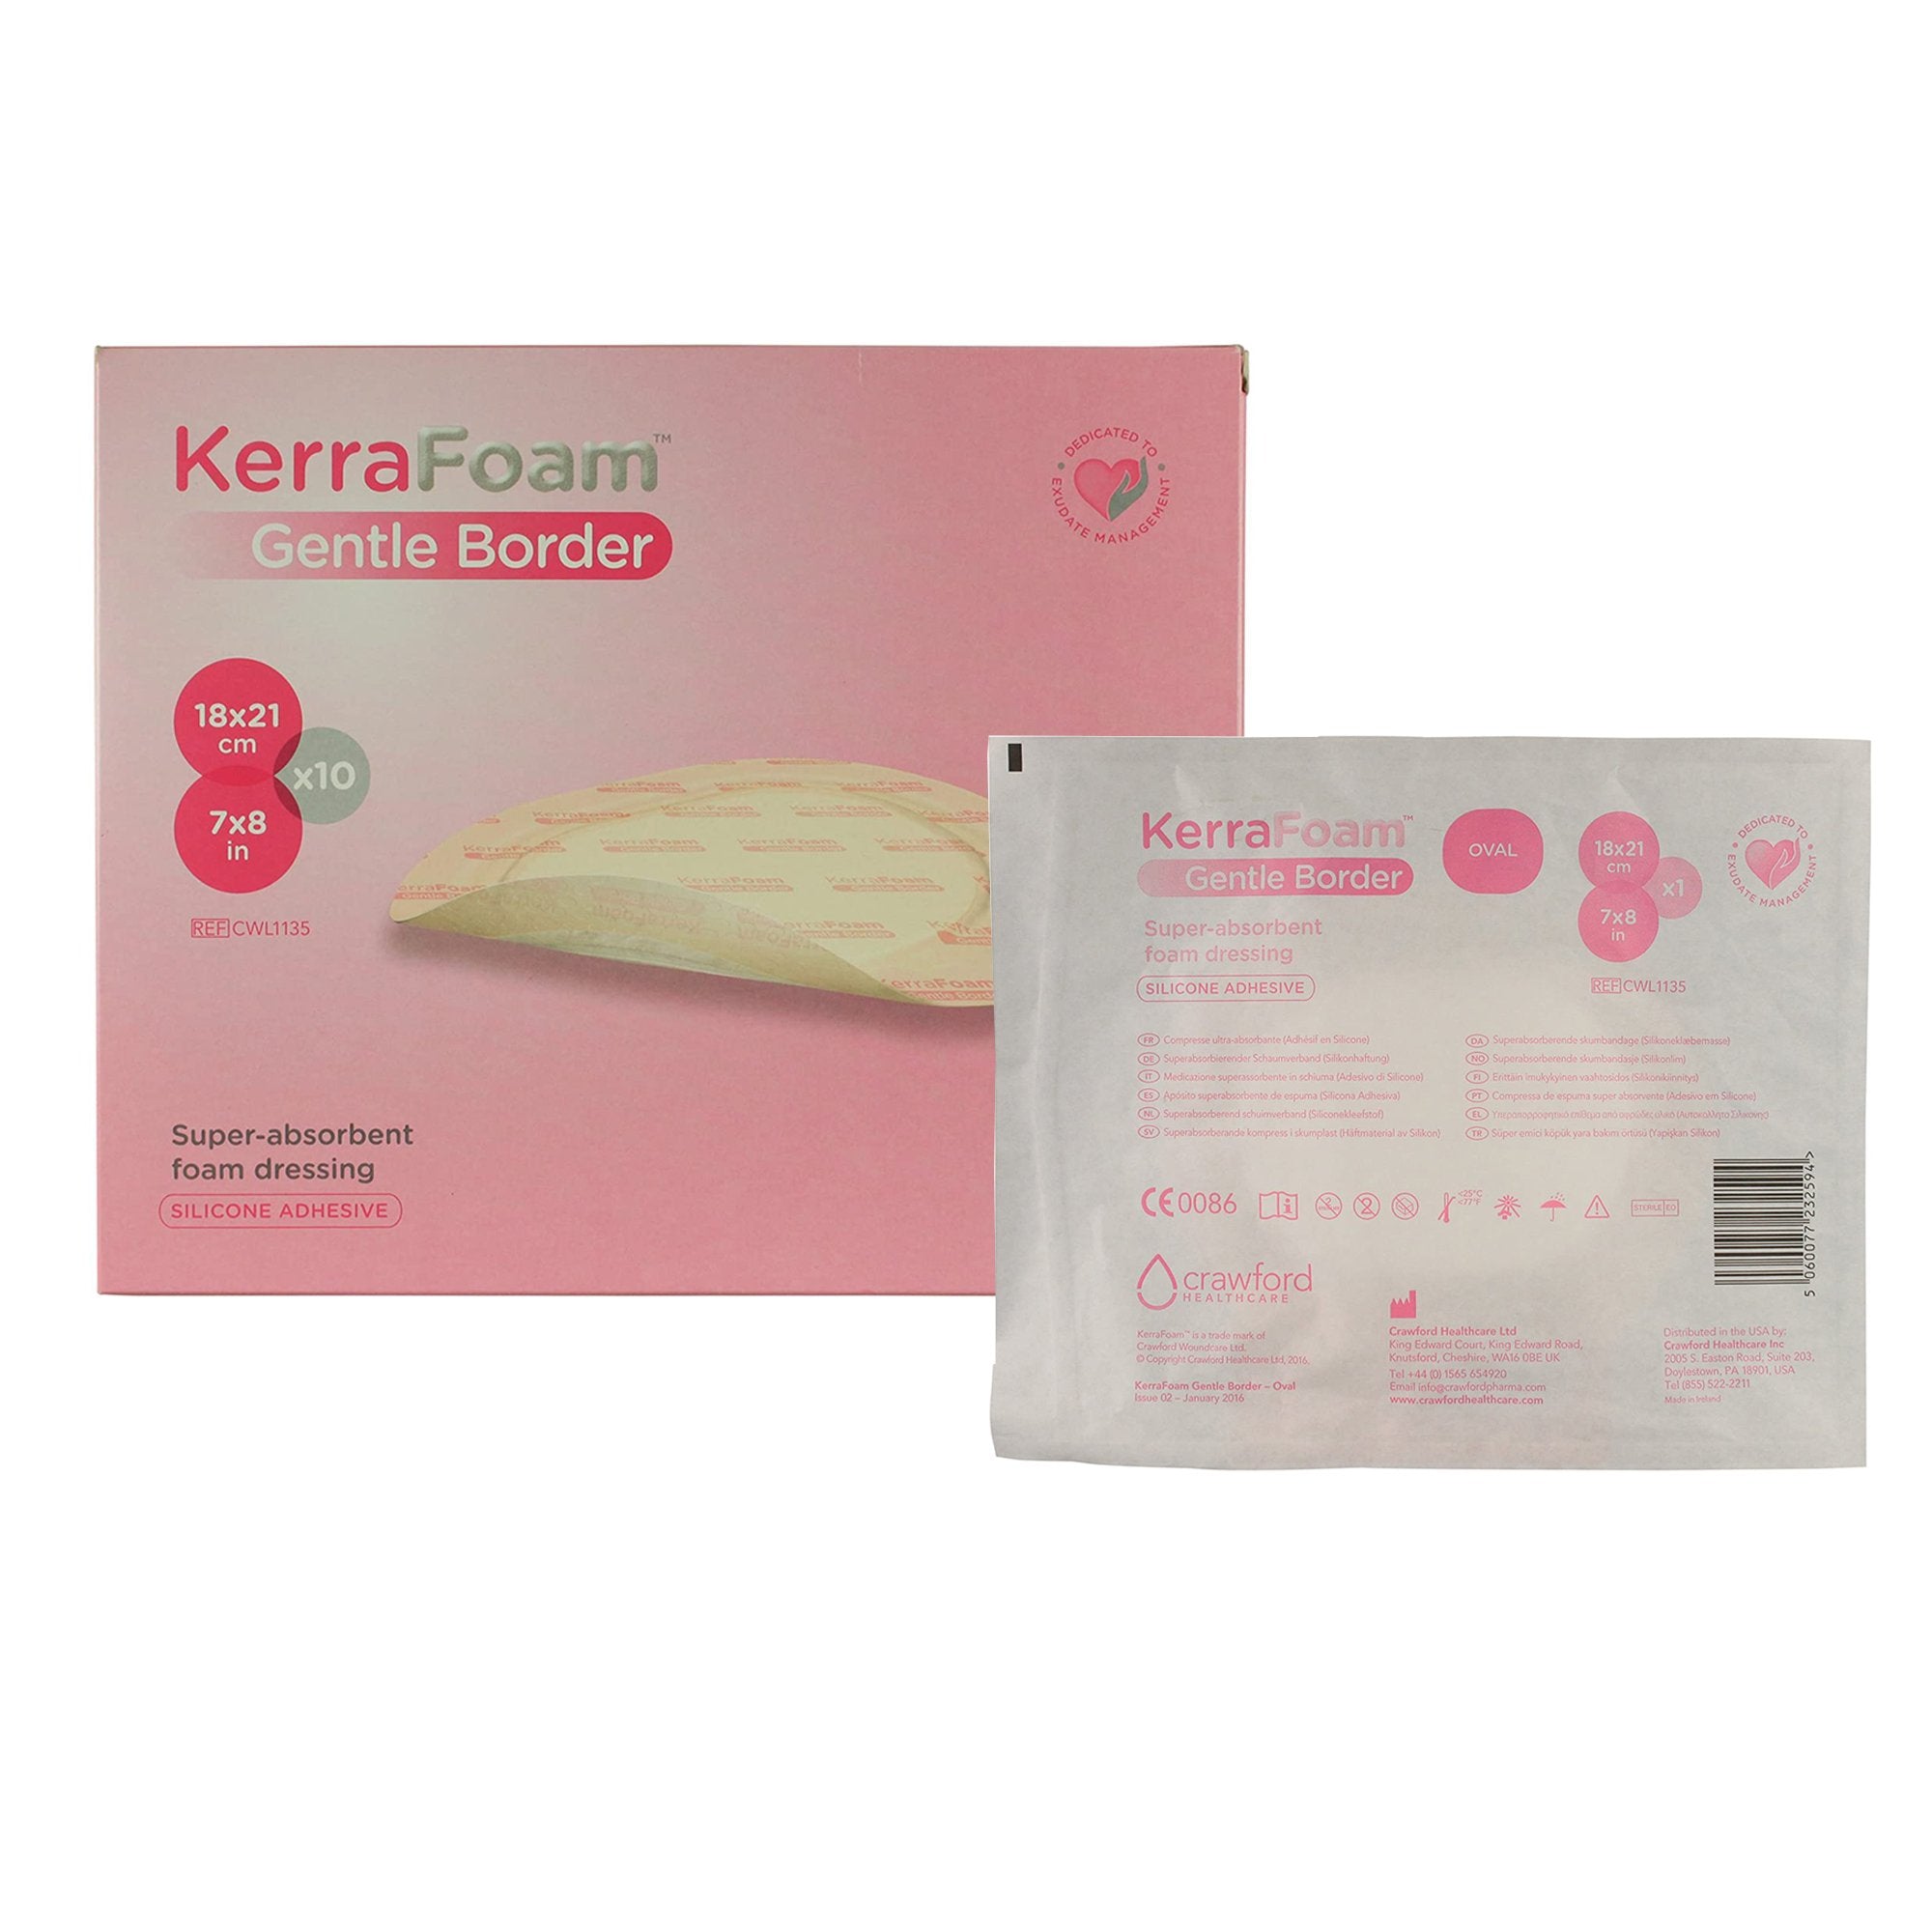 Foam Dressing KerraFoam™ Gentle Border 7 X 8 Inch With Border Film Backing Silicone Adhesive Oval Sterile